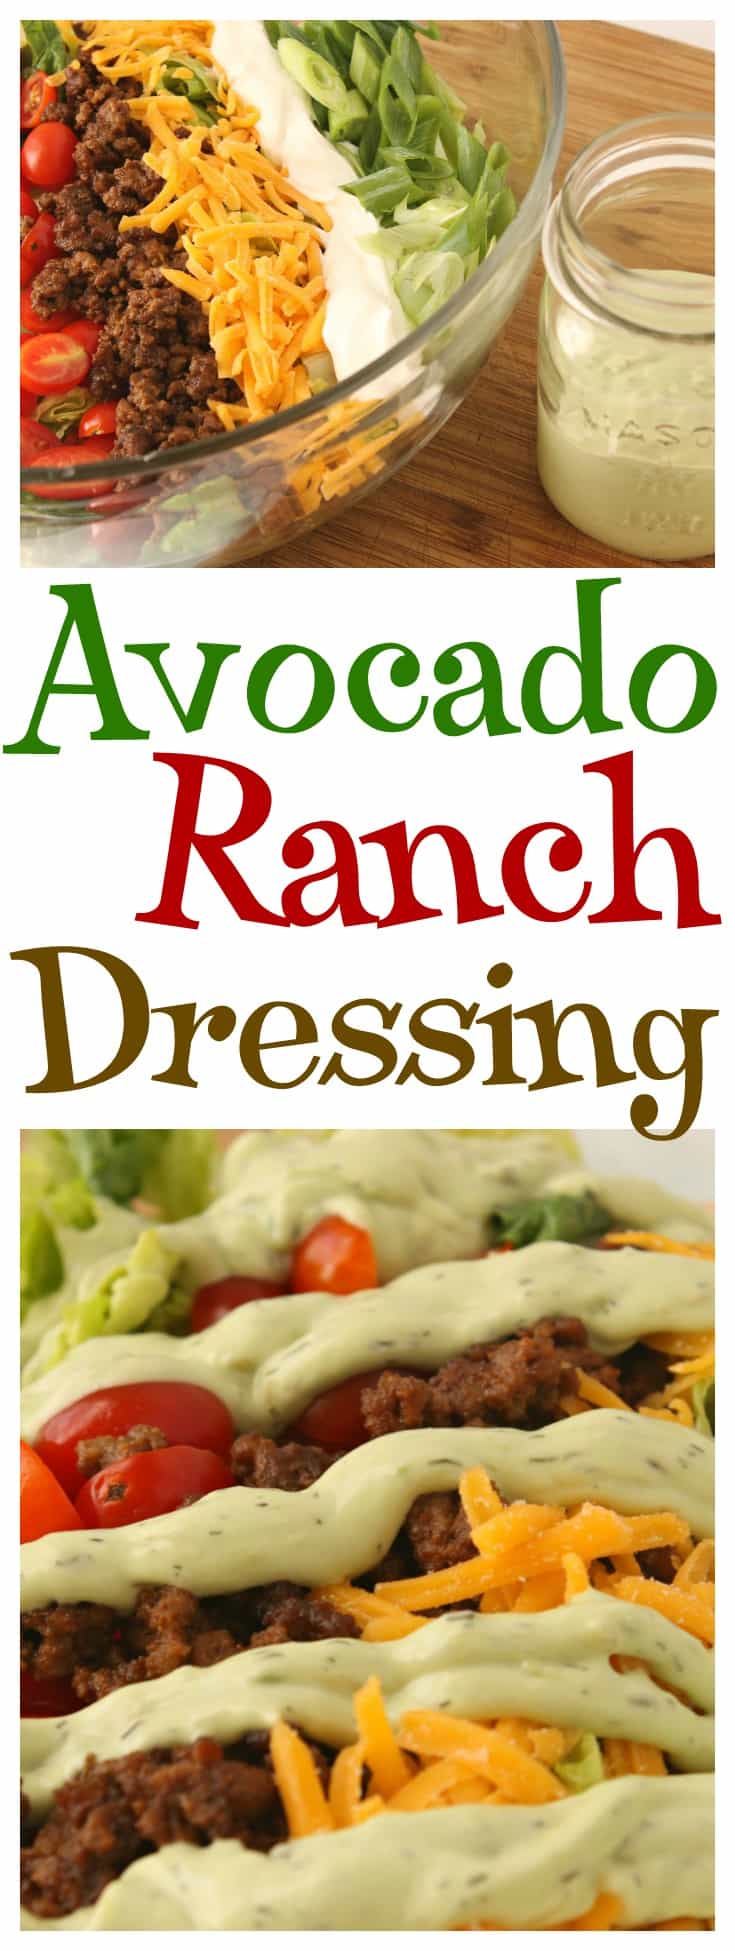 avocado ranch dressing